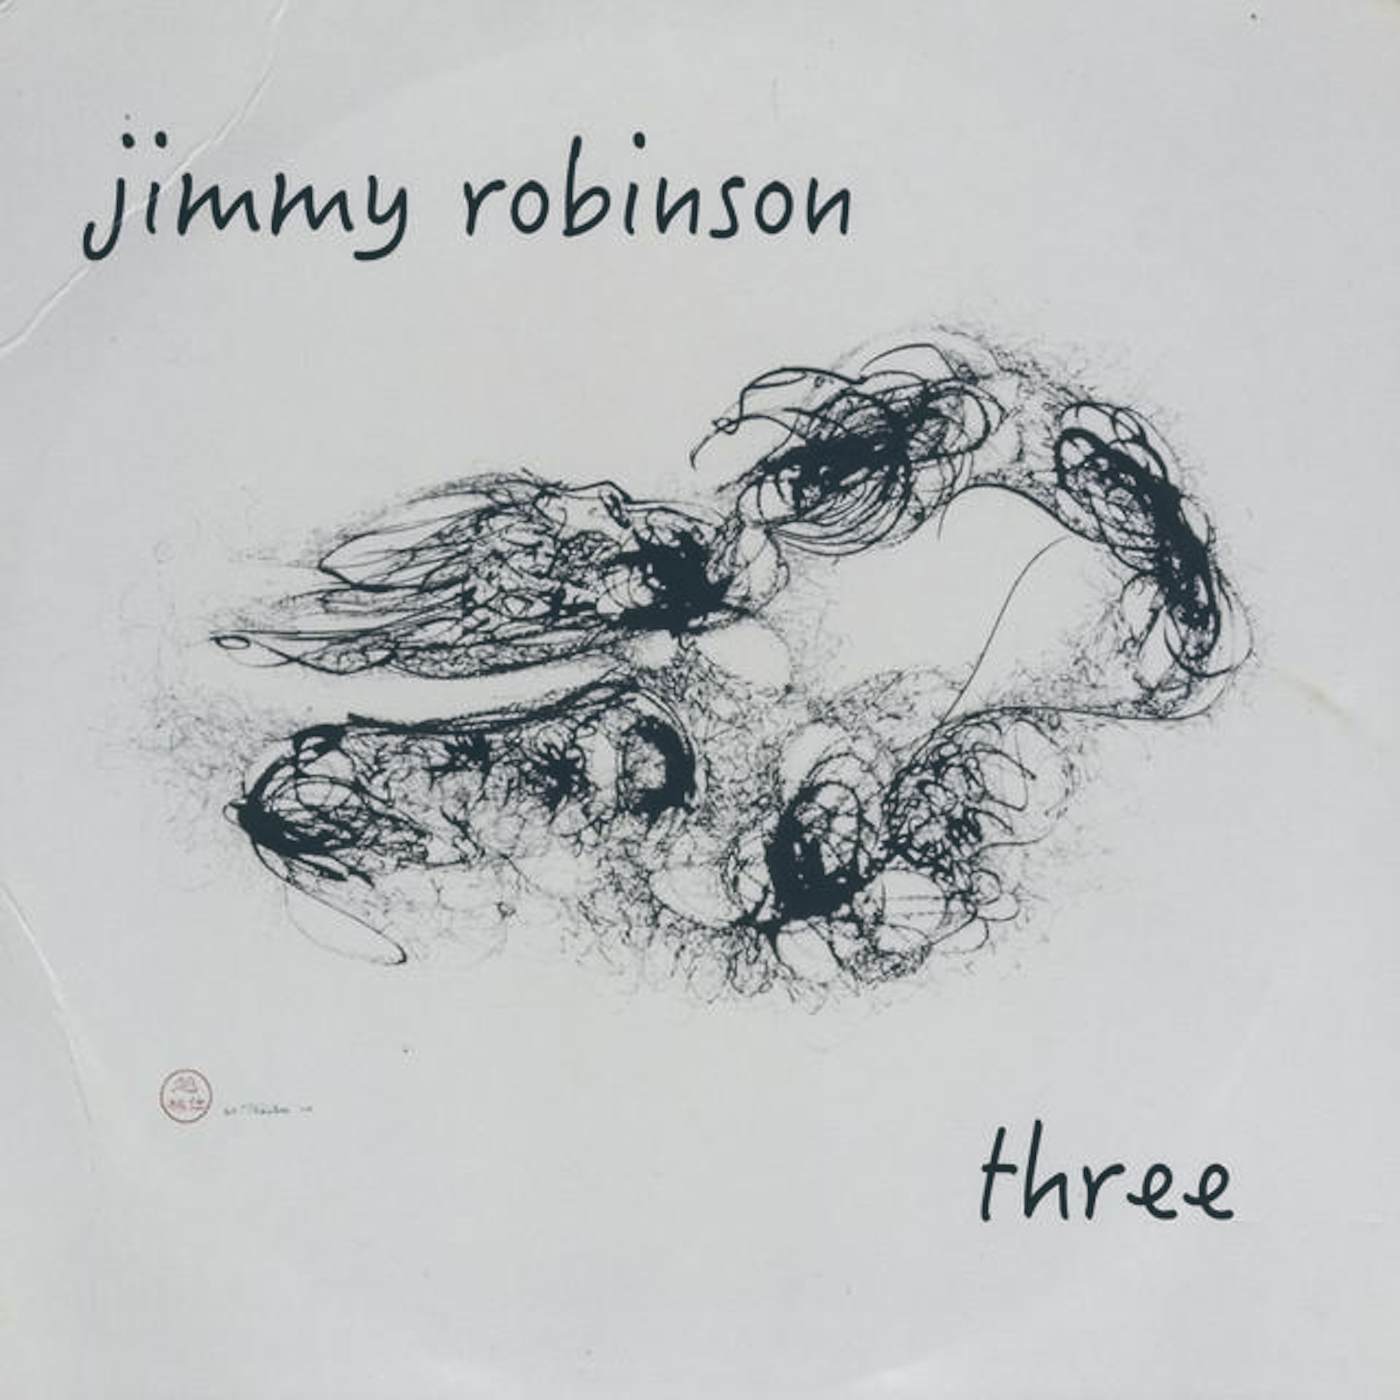 Jimmy Robinson